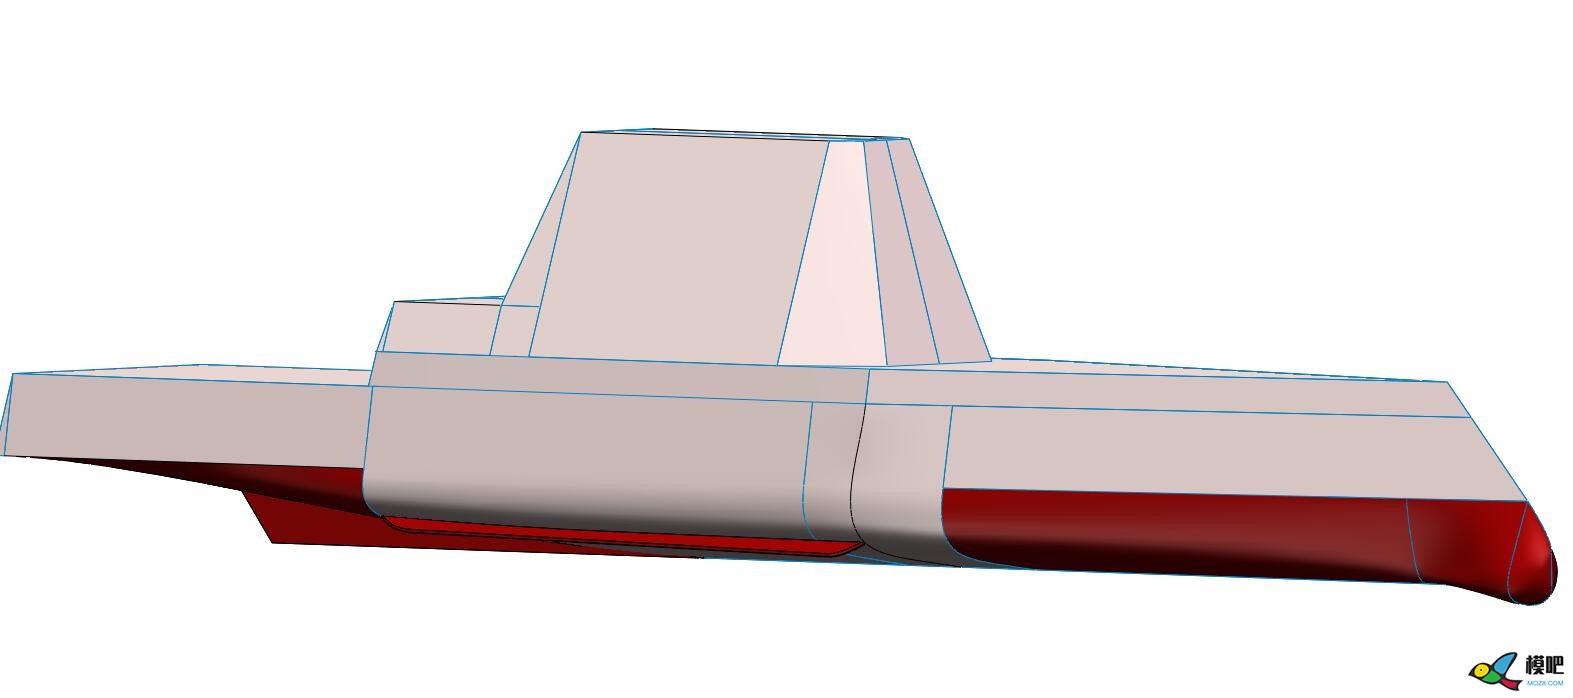 DDG1000朱姆沃尔特100比木质套材建模设计制作 船模型,rc船模制作教程,船模制作 船身,如何制作船模,船模 作者:慢克来了 8824 